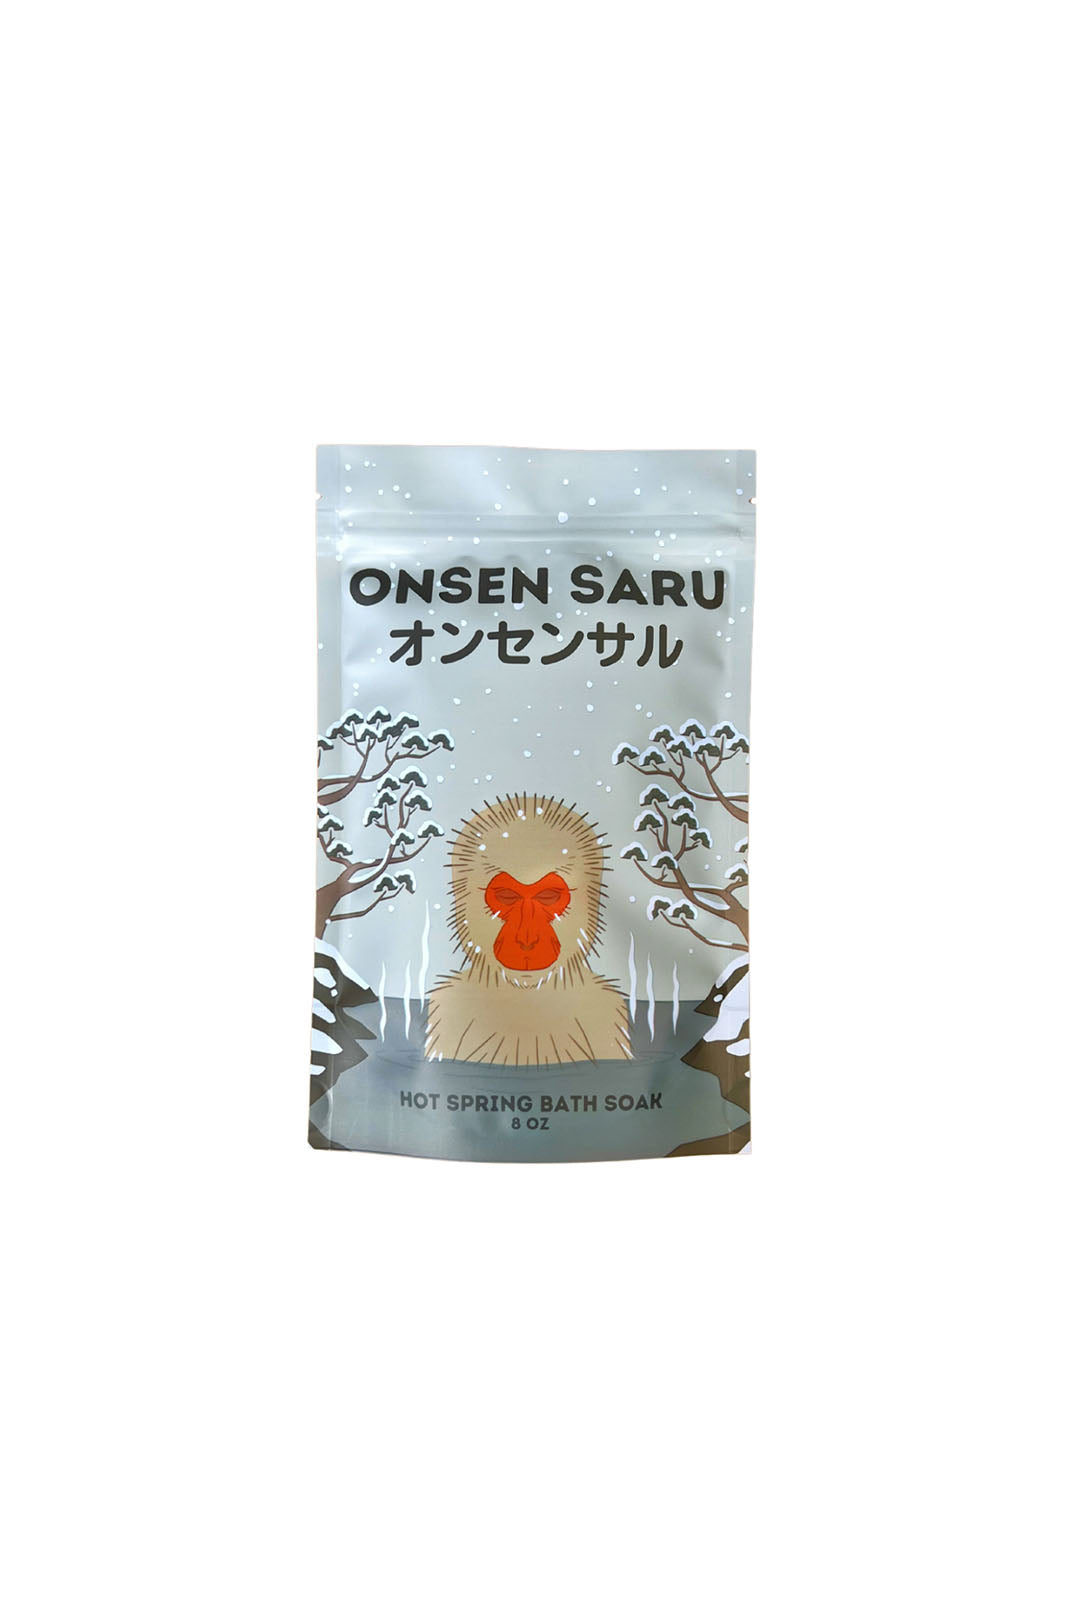 Onsen Saru Hot Spring Bath Soak, 8 oz.